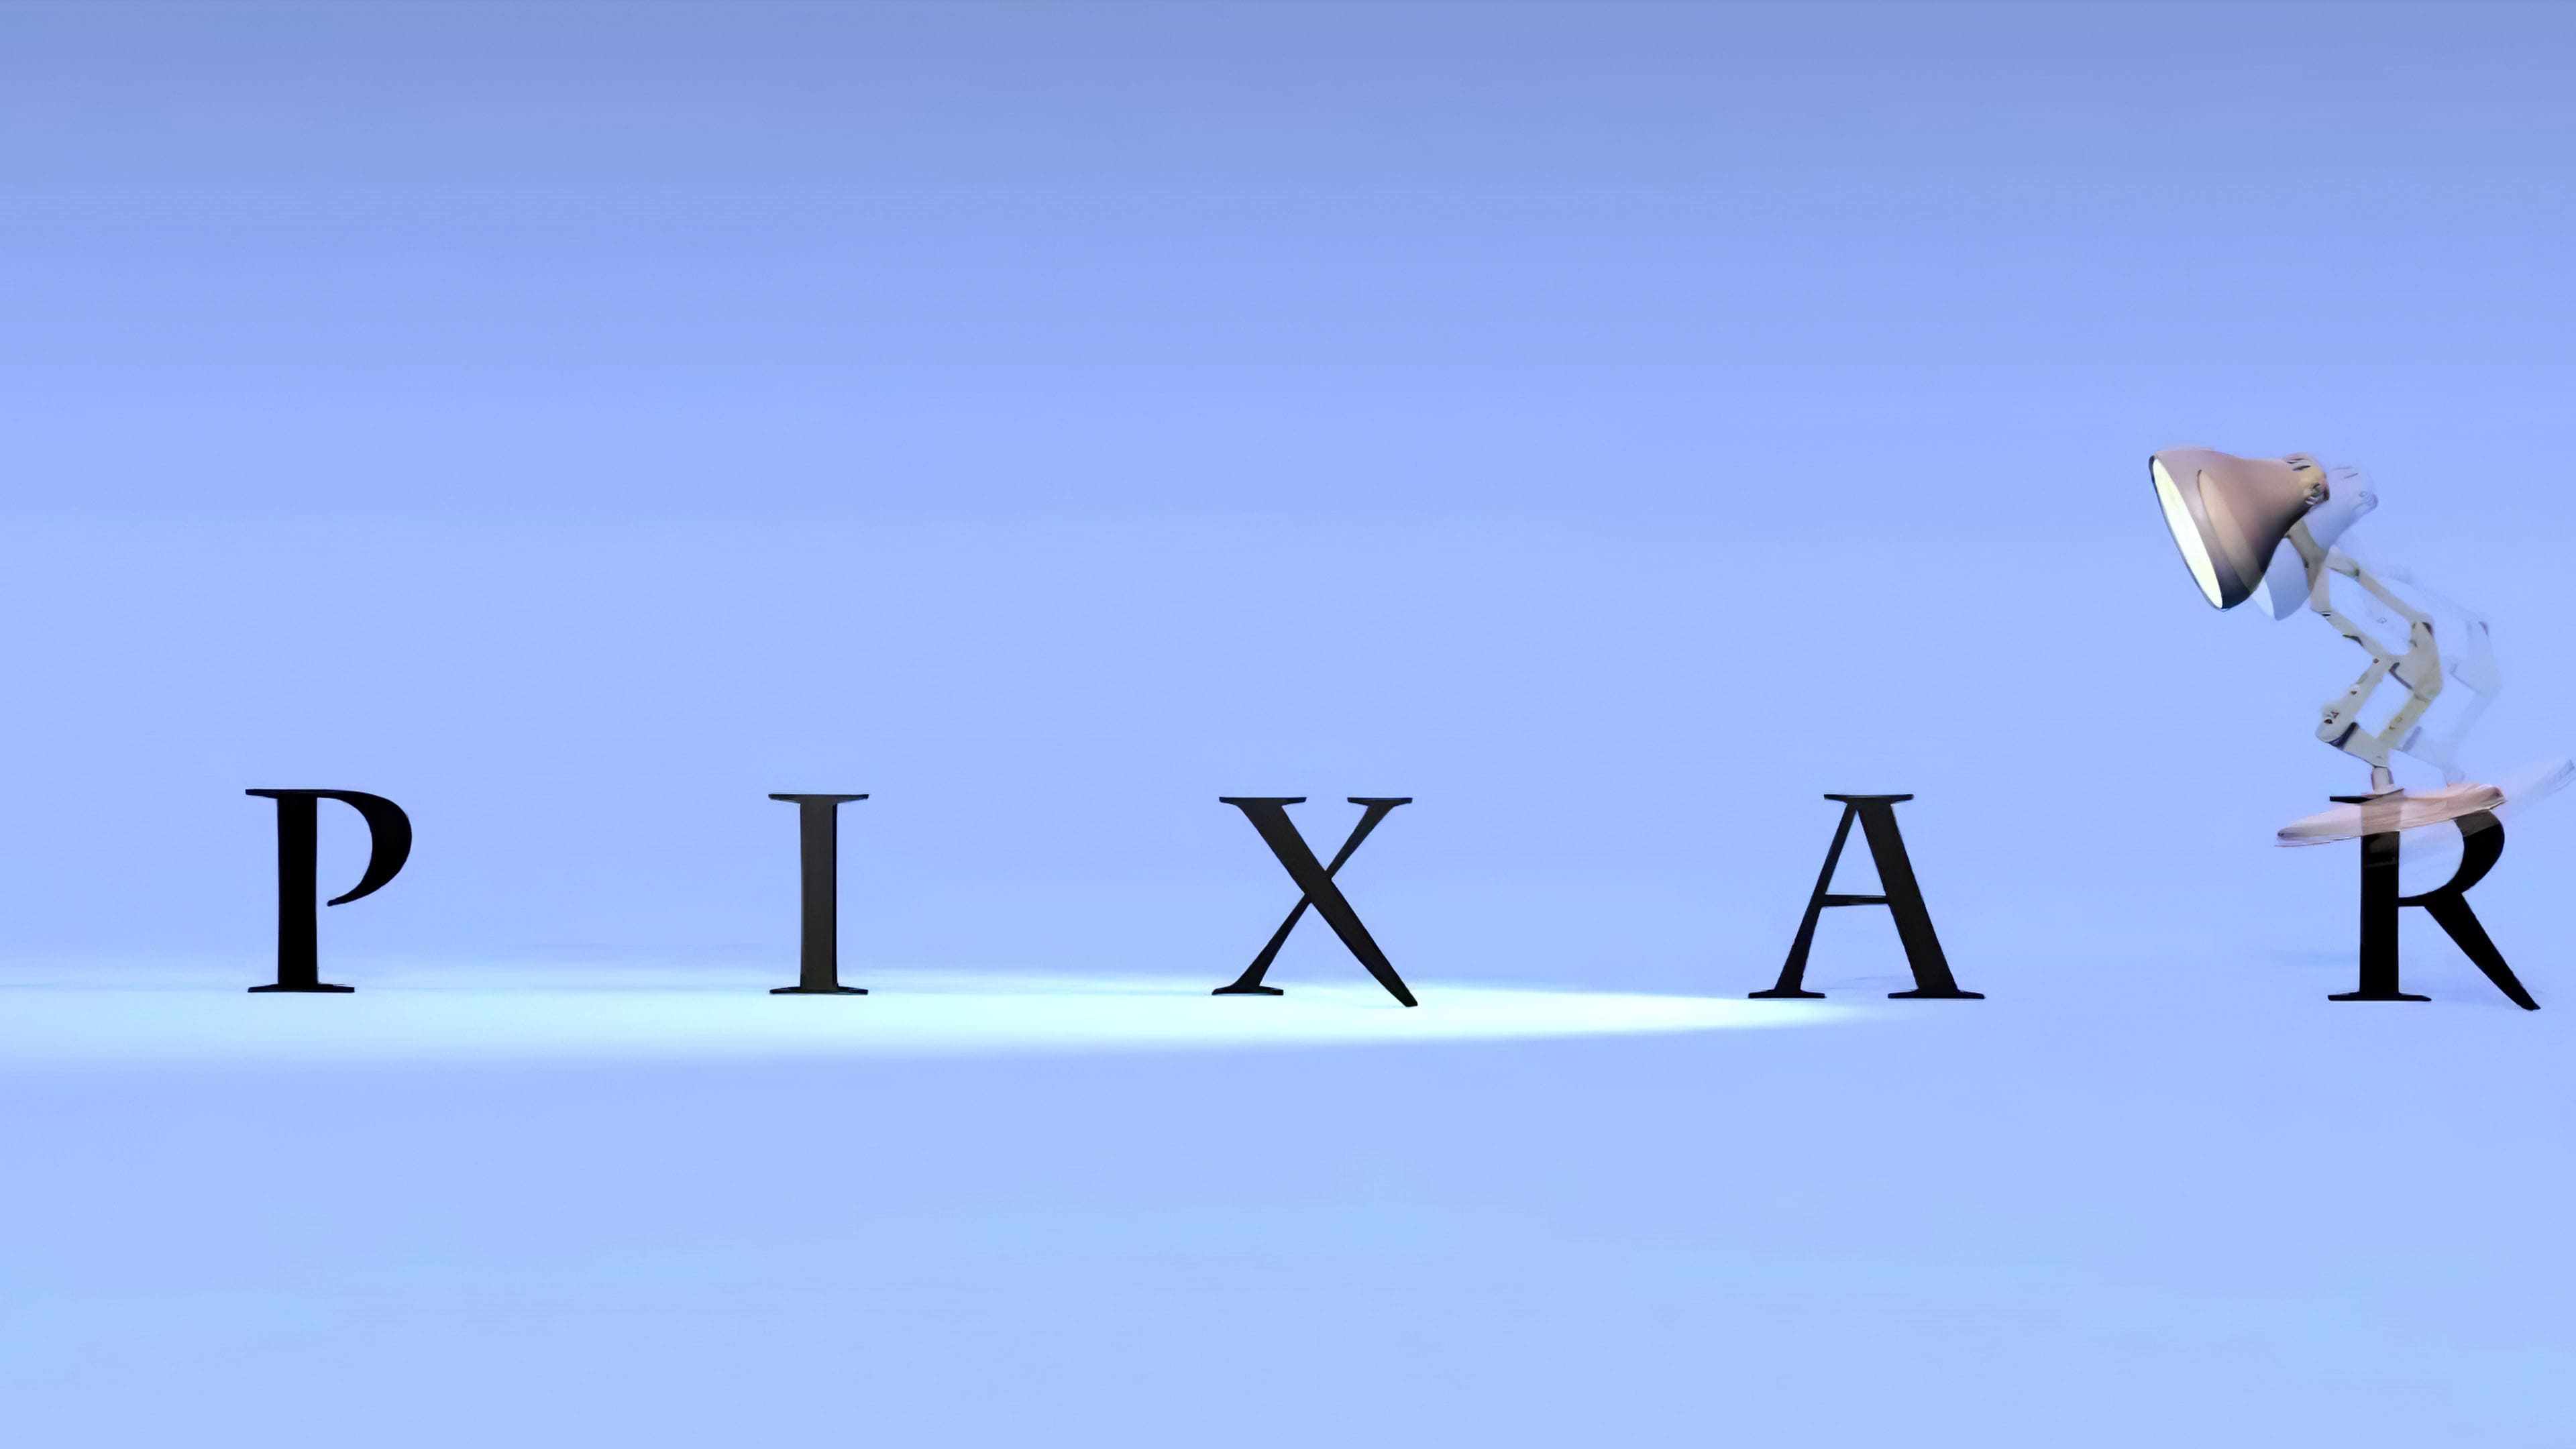 Три буквы первое х. Pixar заставка. Заставка киностудии Пиксар. Буквы Пиксар. Pixar логотип.